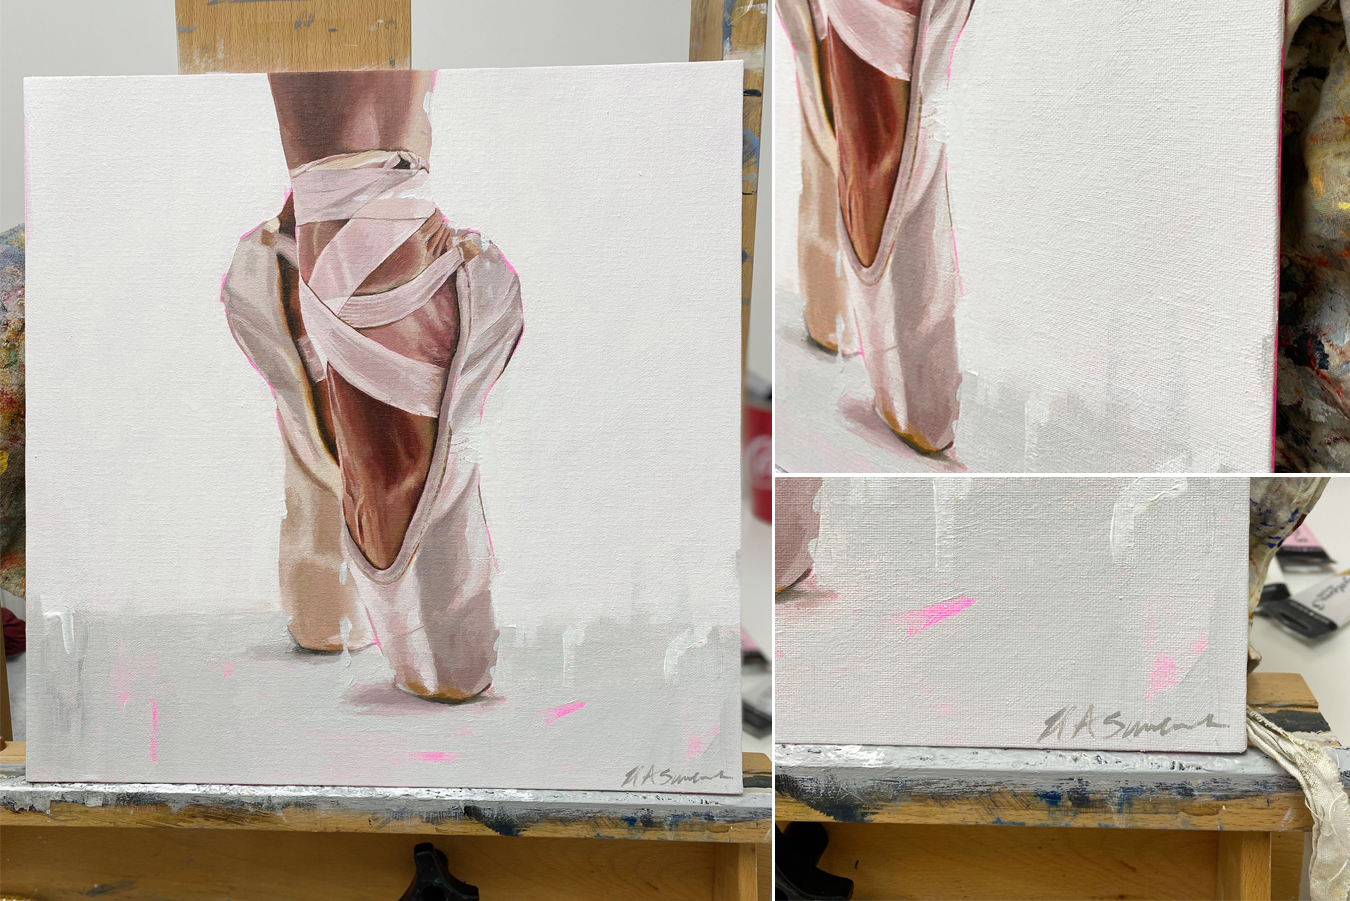 479-ballet-shoe-detail-original-16804490657417.jpg